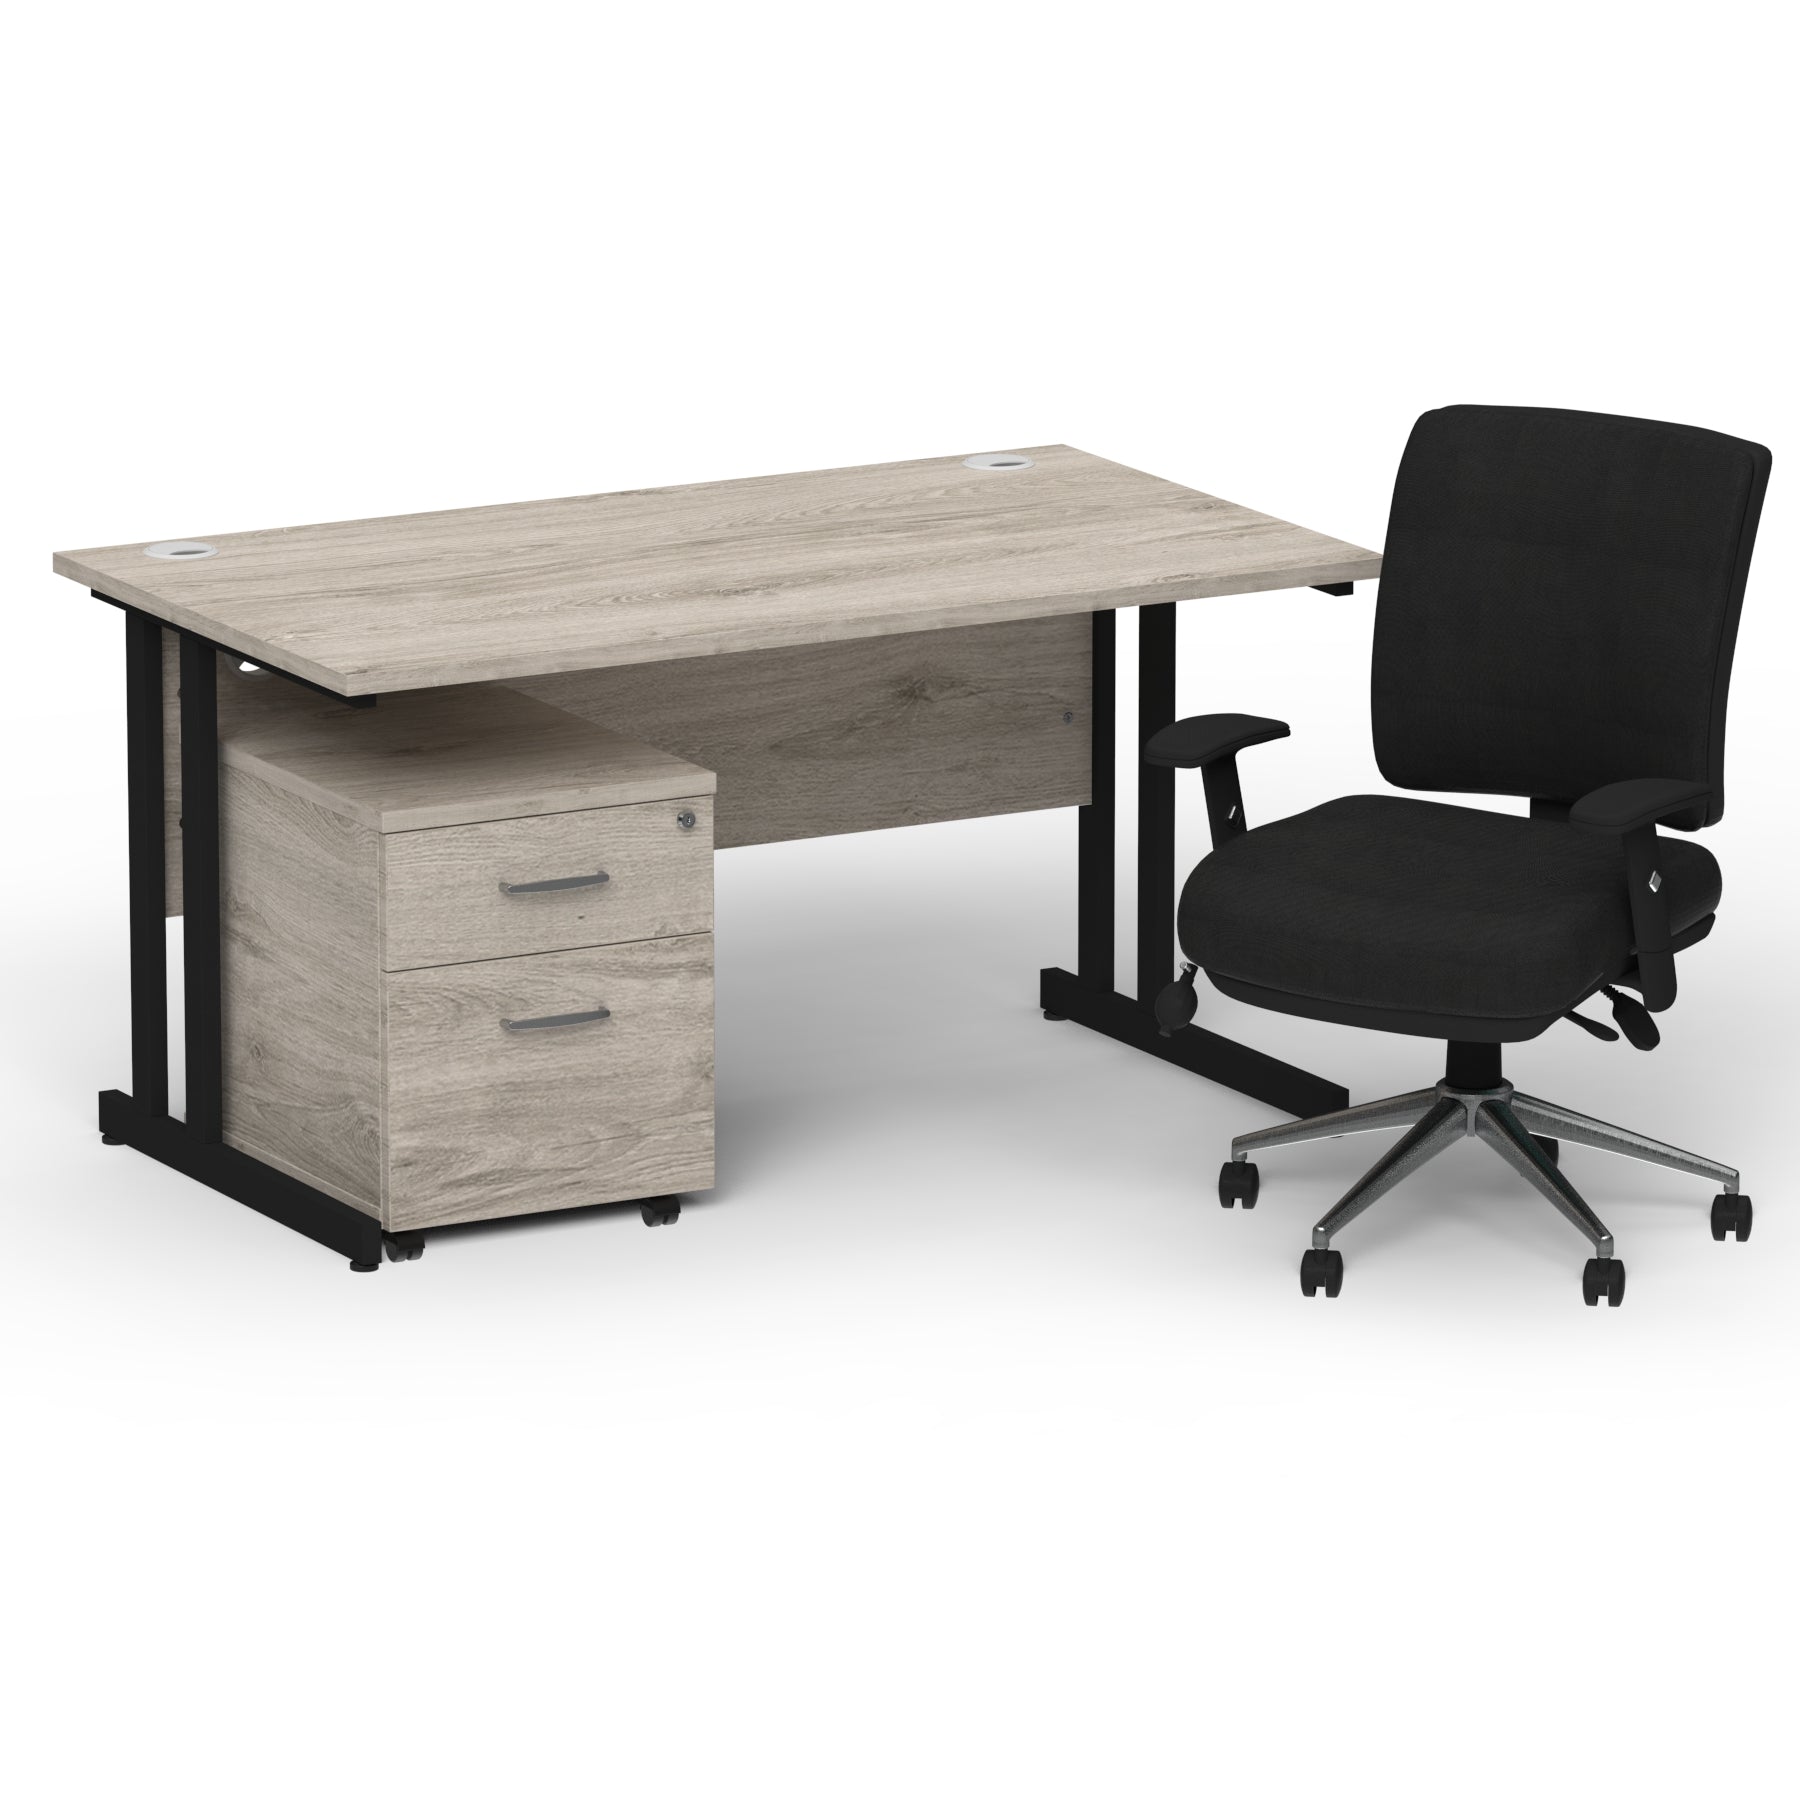 Impulse 1400mm Cantilever Straight Desk & Mobile Pedestal with Chiro Medium Back Black Operator Chair - 5 Year Furniture Guarantee